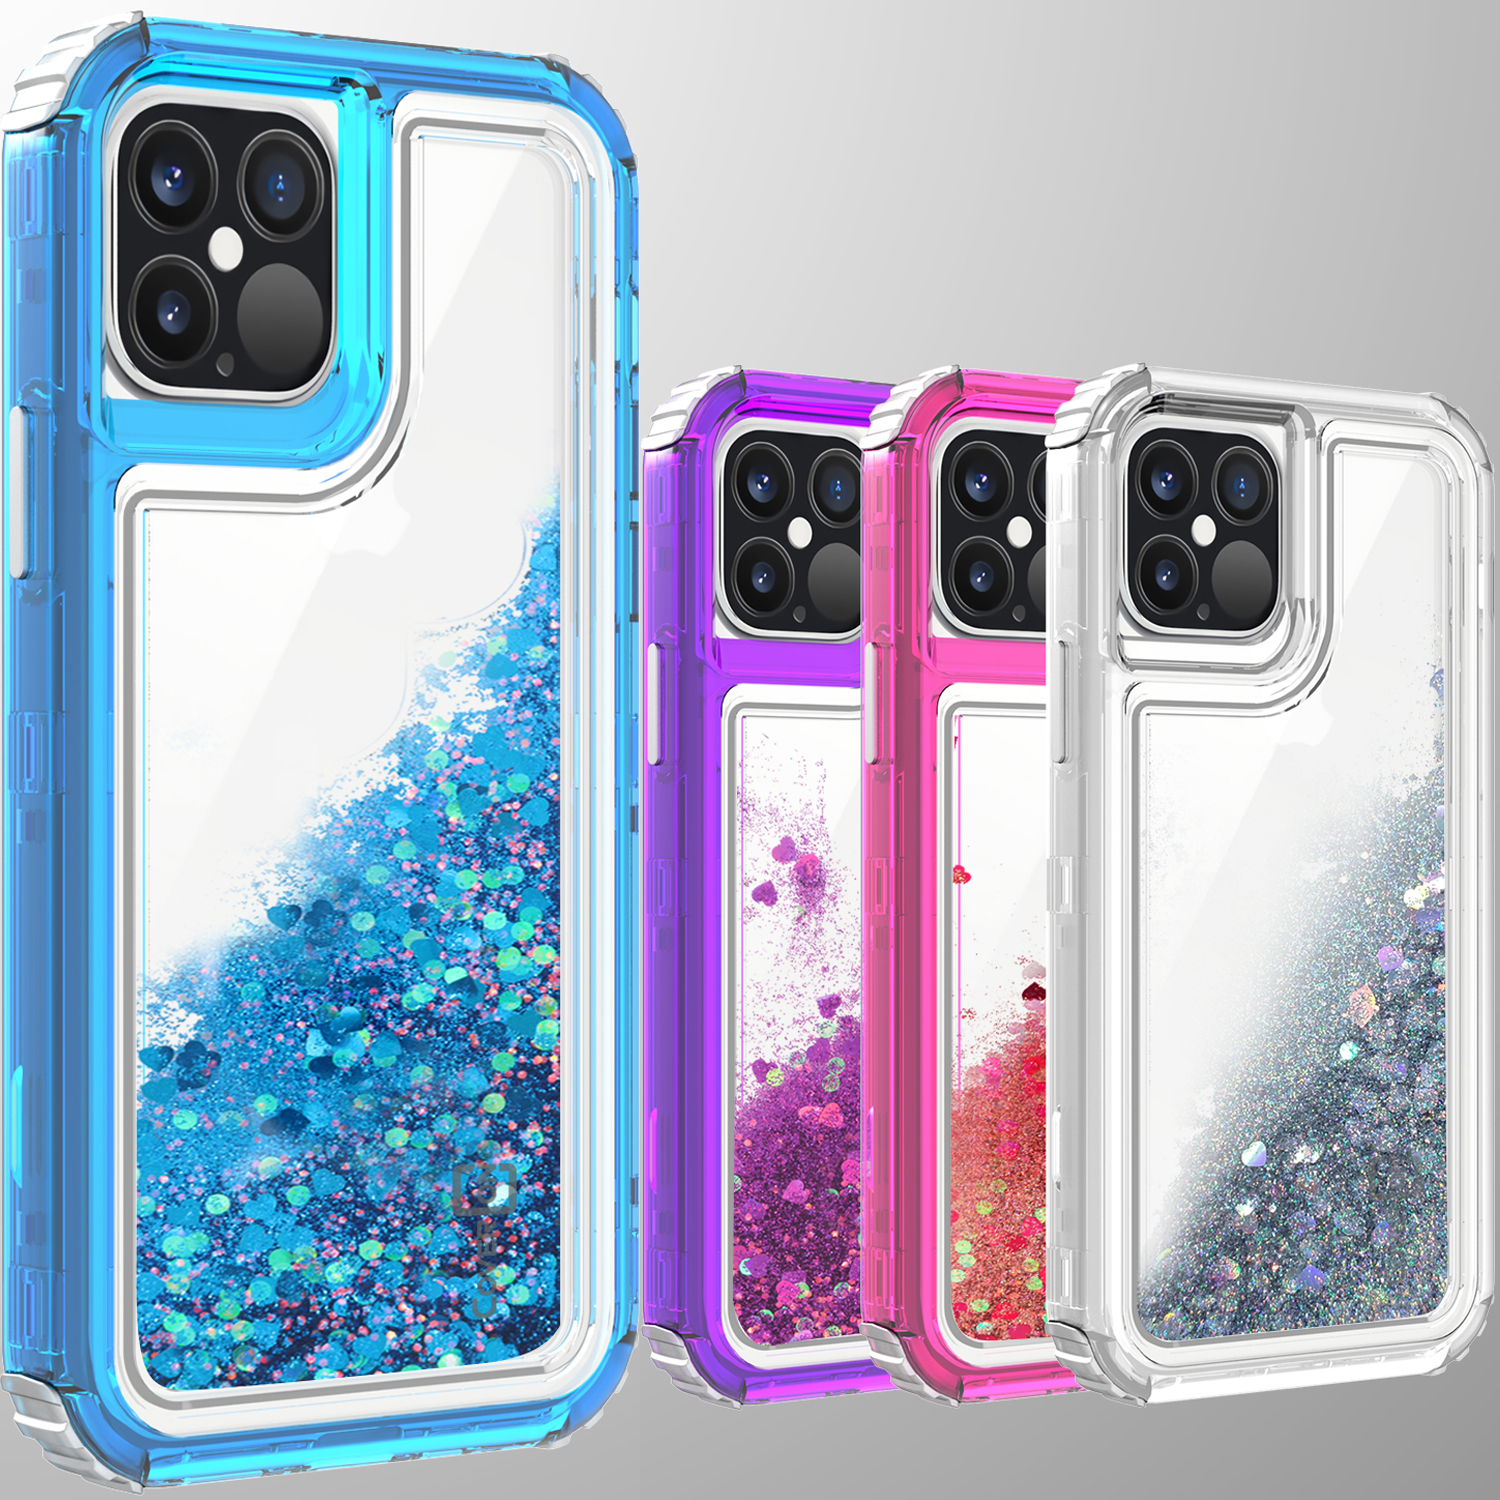 iphone 12 colors pro max case